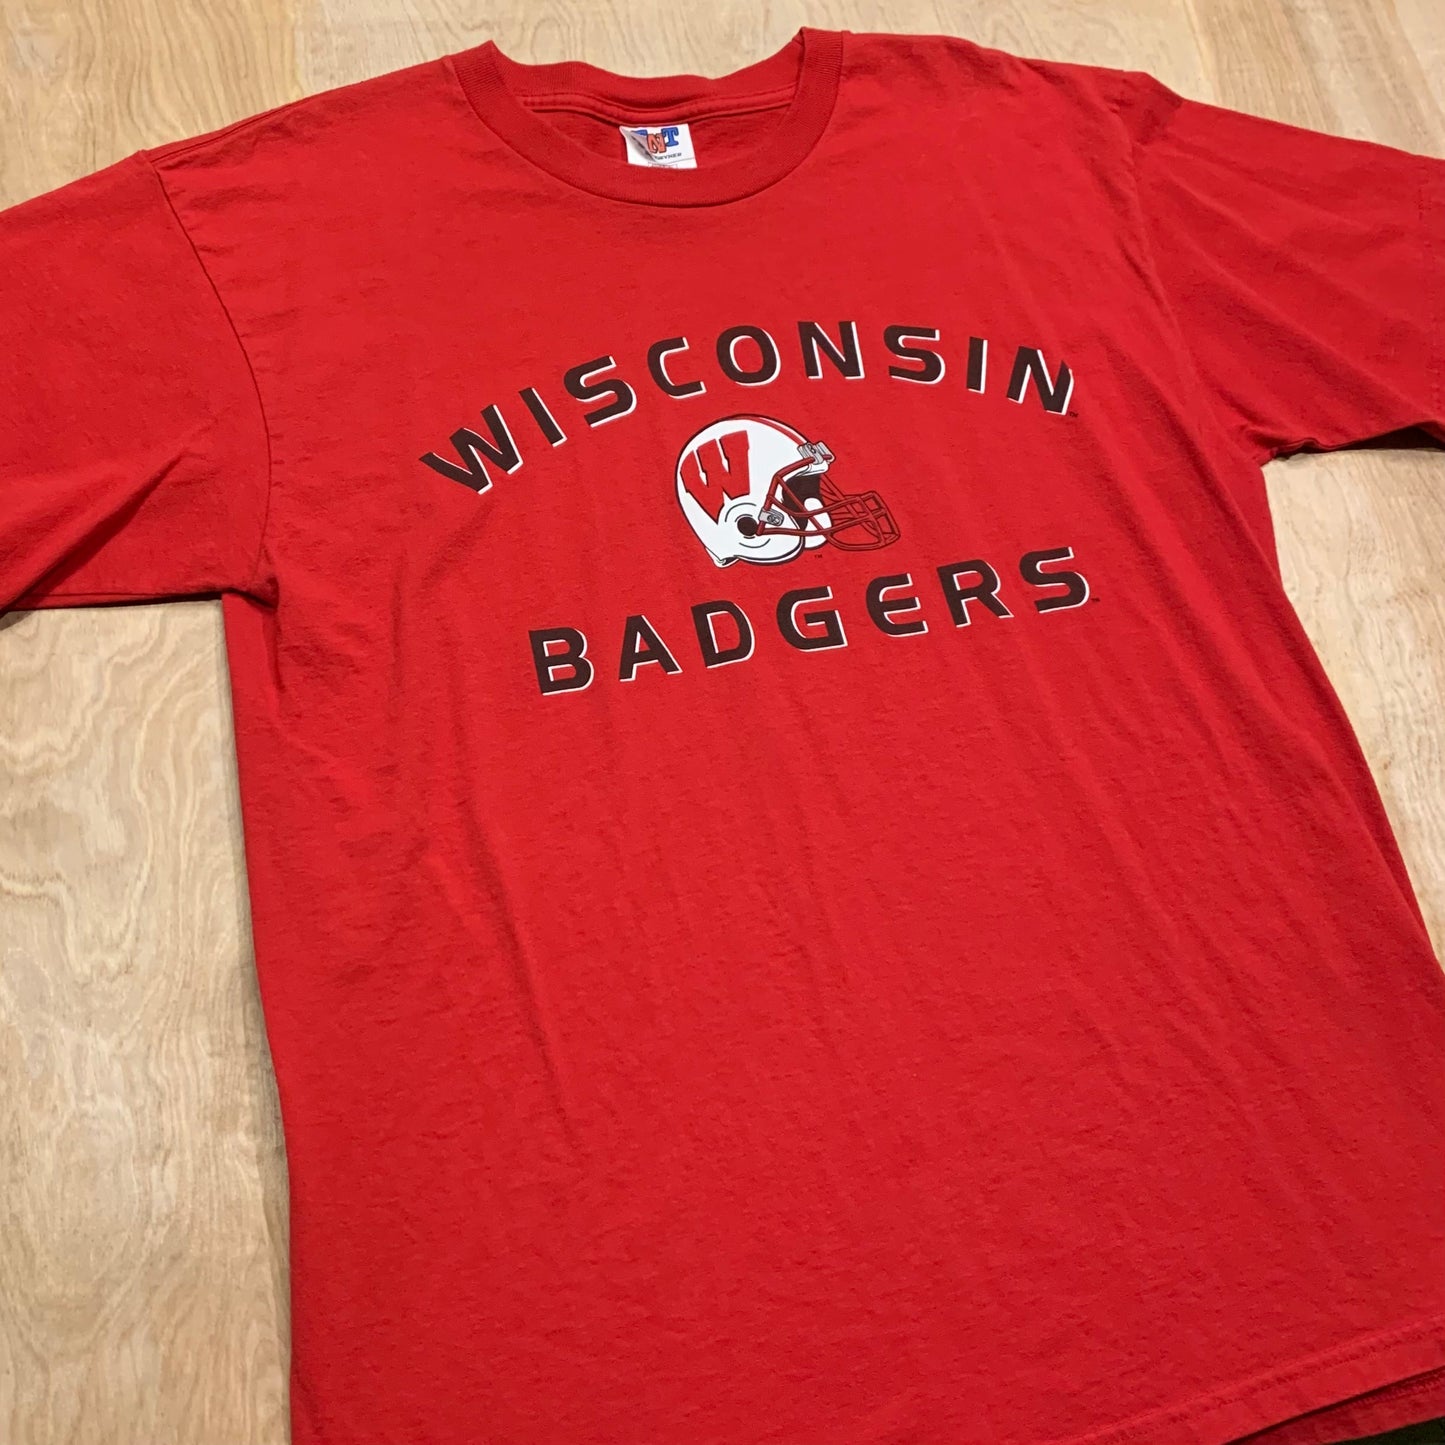 Vintage Wisconsin Badgers Football T-Shirt